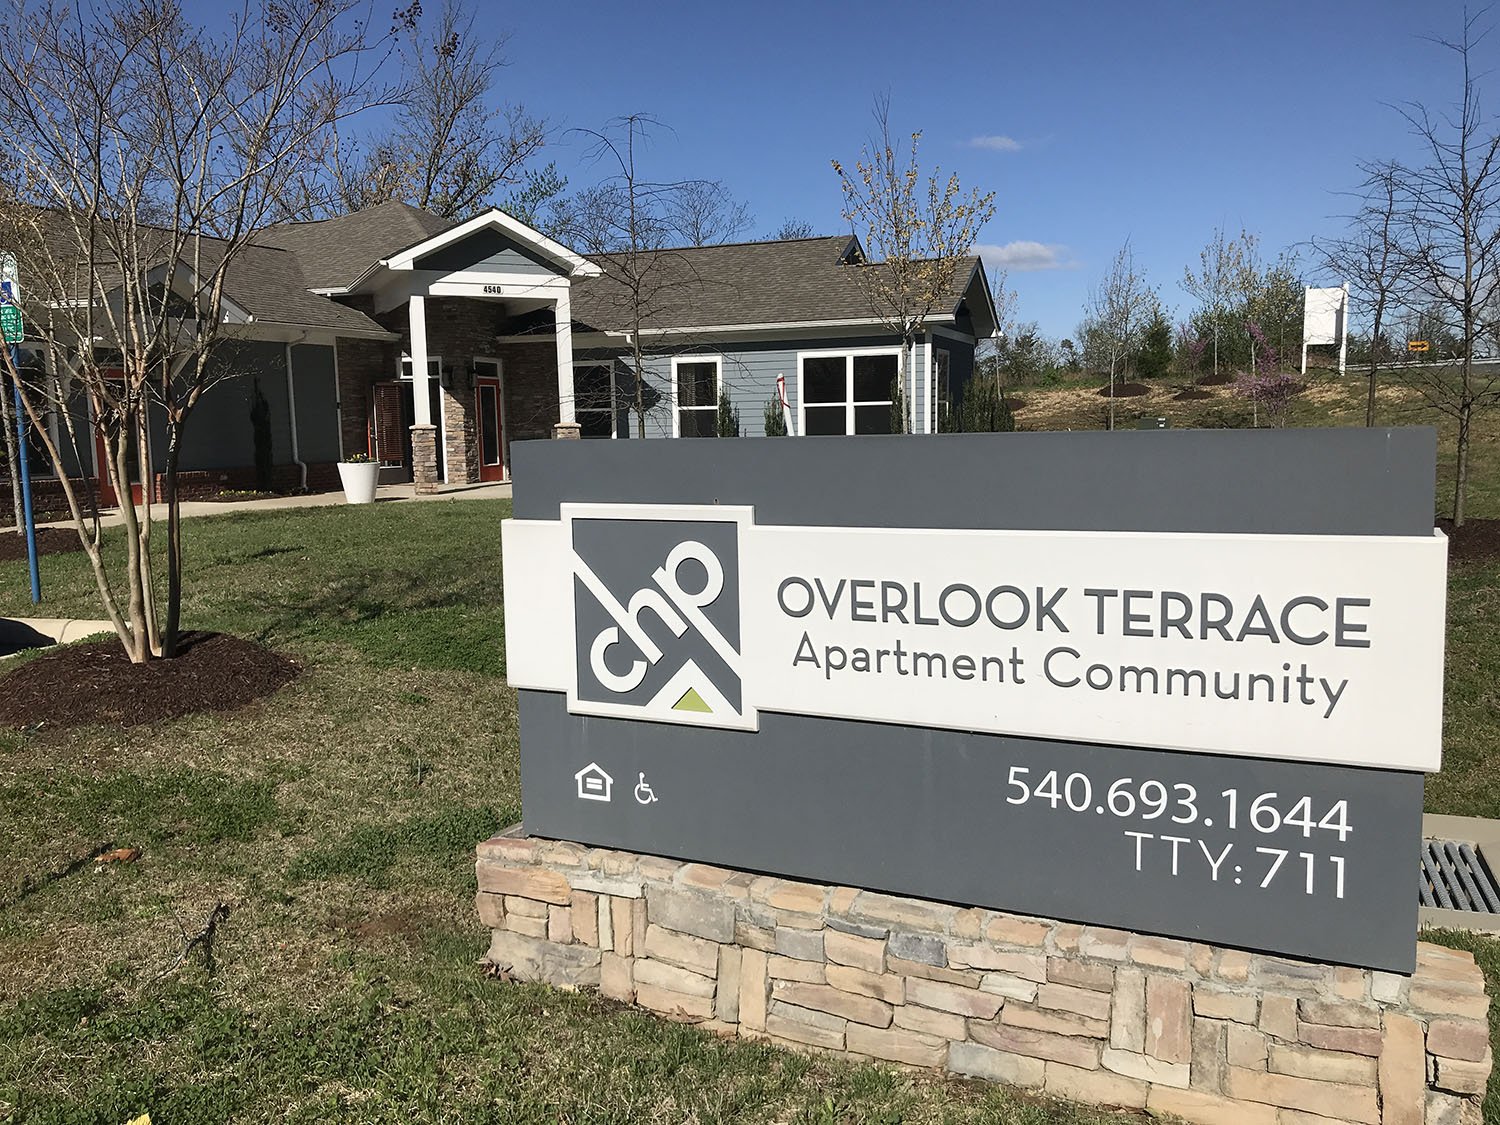 Overlook Terrace Community Center